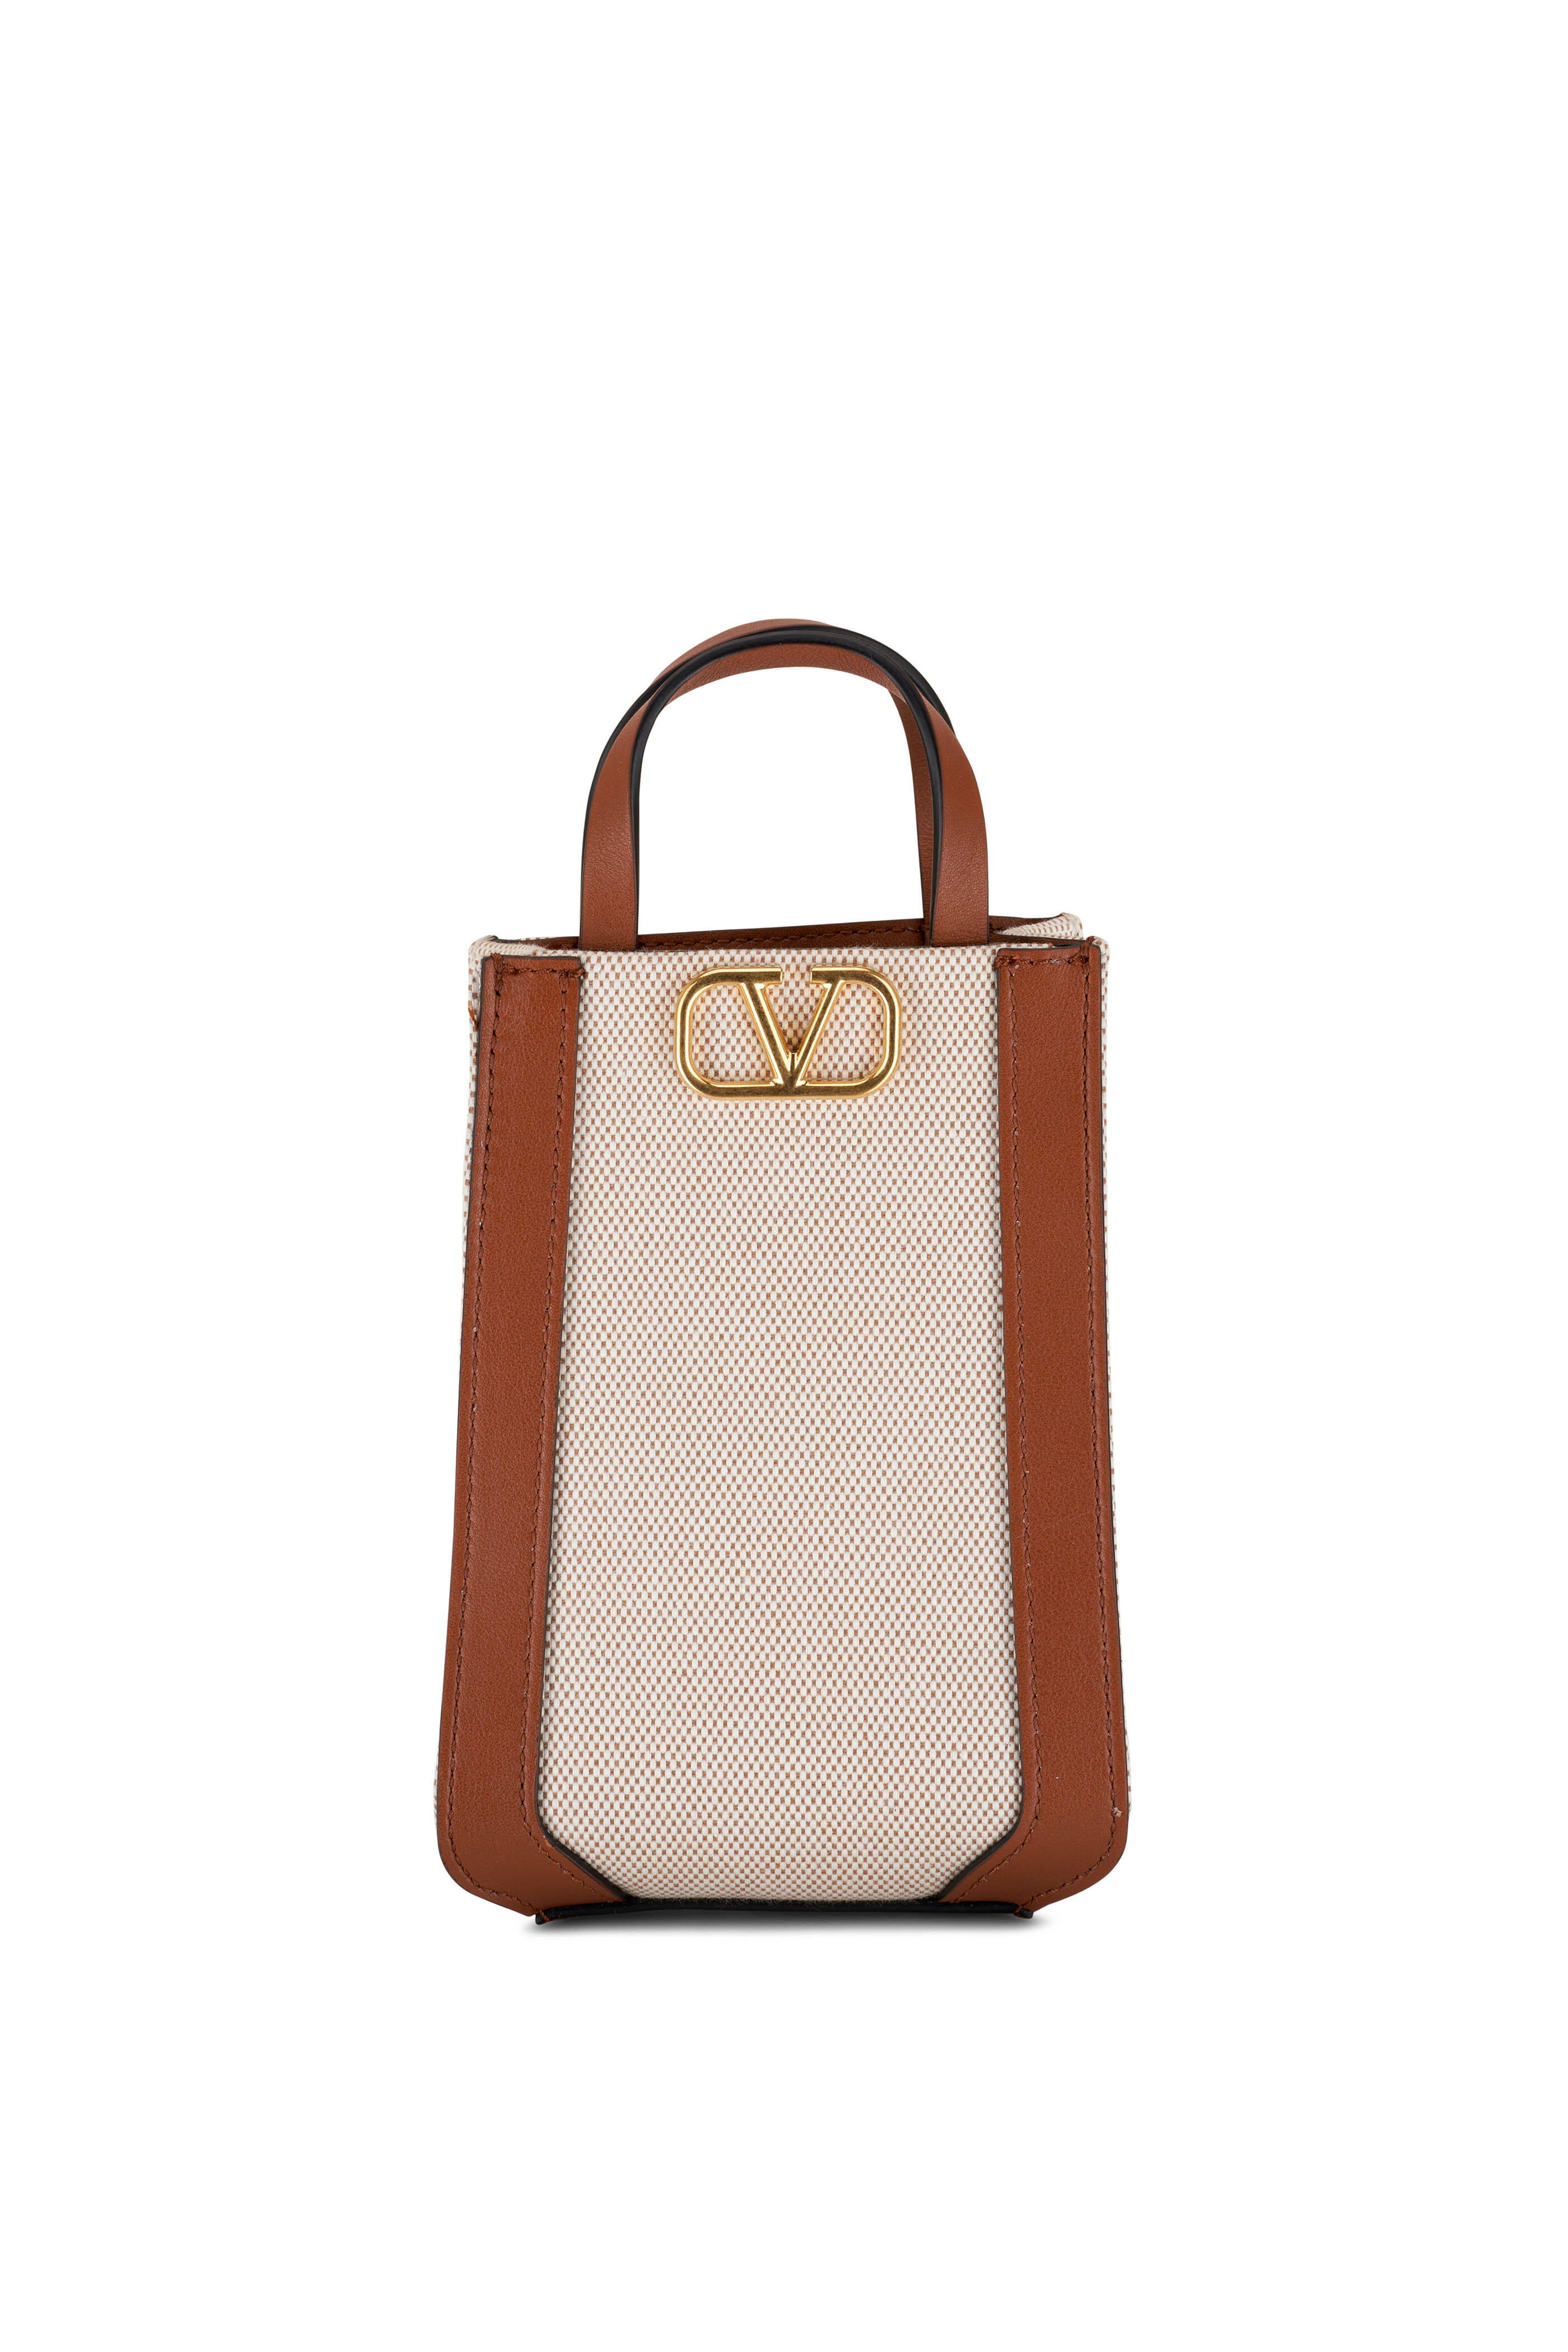 Valentino Garavani - Ivory Canvas & Brown Leather Phone Case with